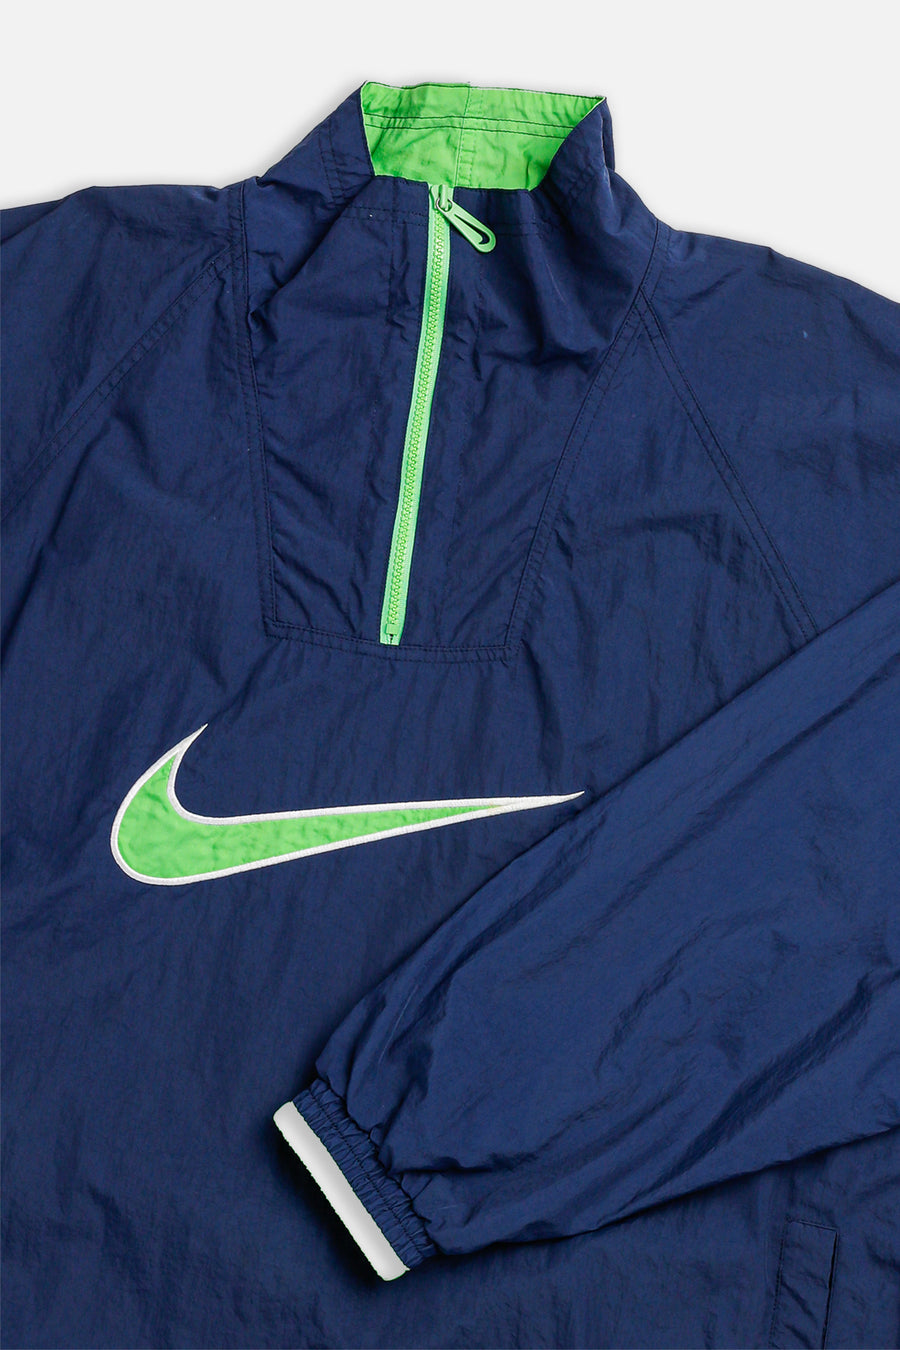 Vintage Nike Pullover Windbreaker Jacket - XXL